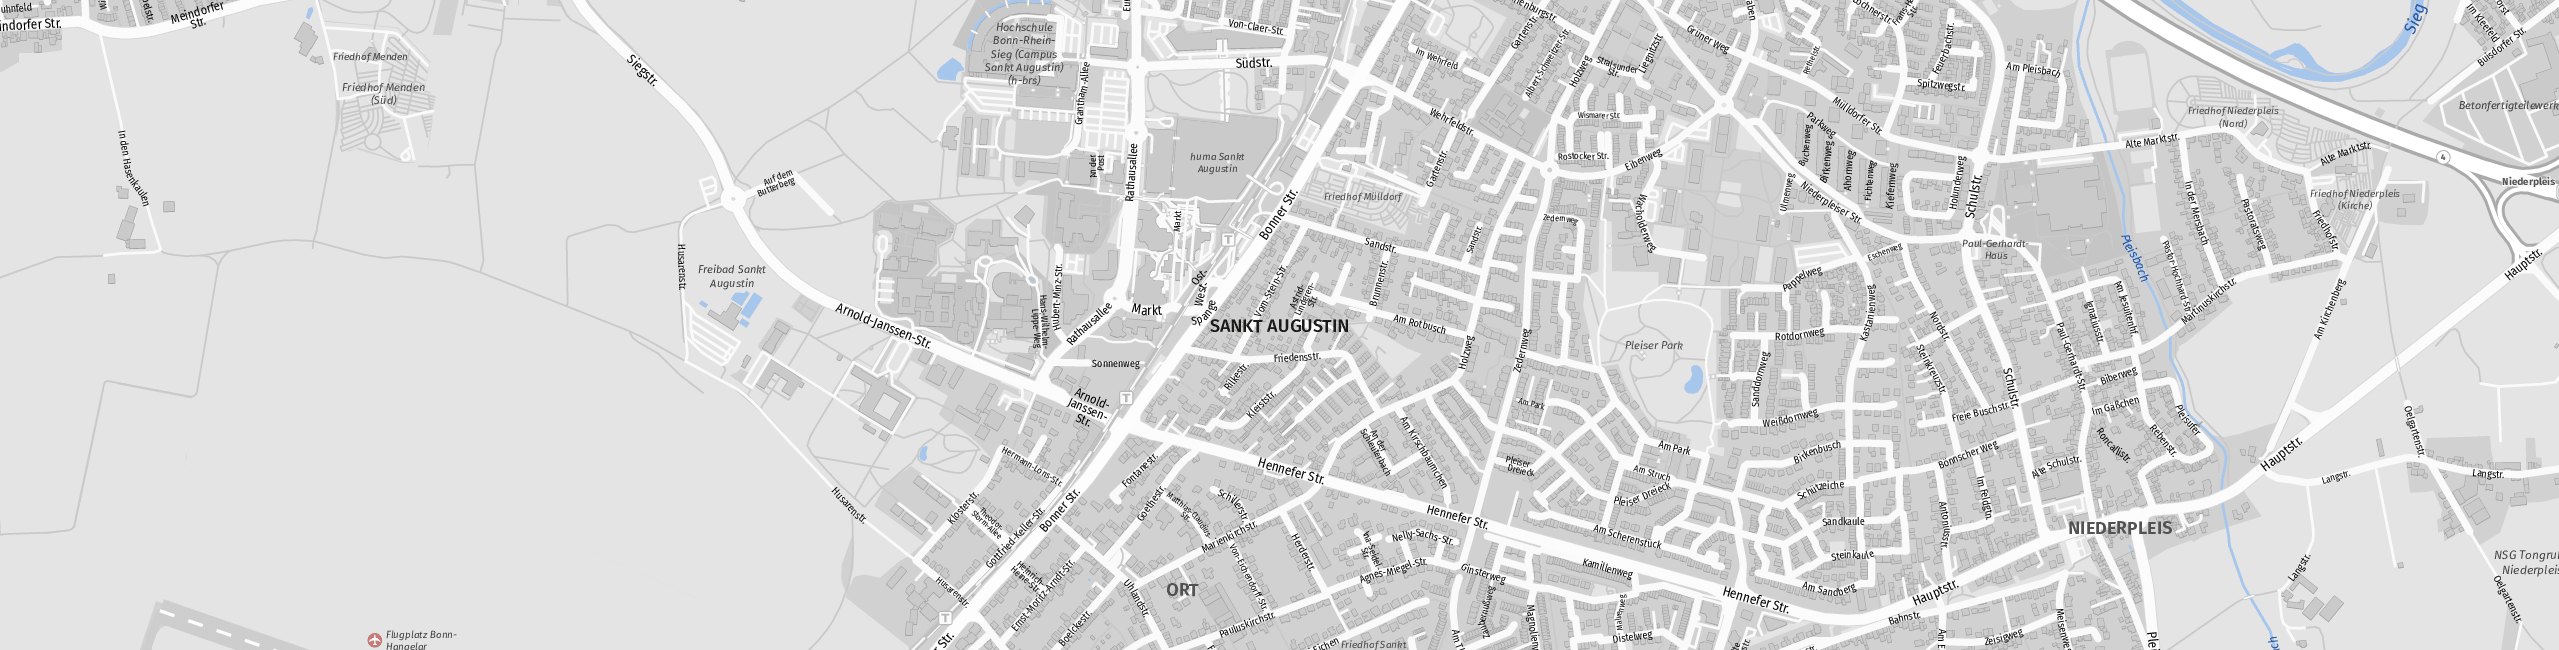 Stadtplan Sankt Augustin zum Downloaden.